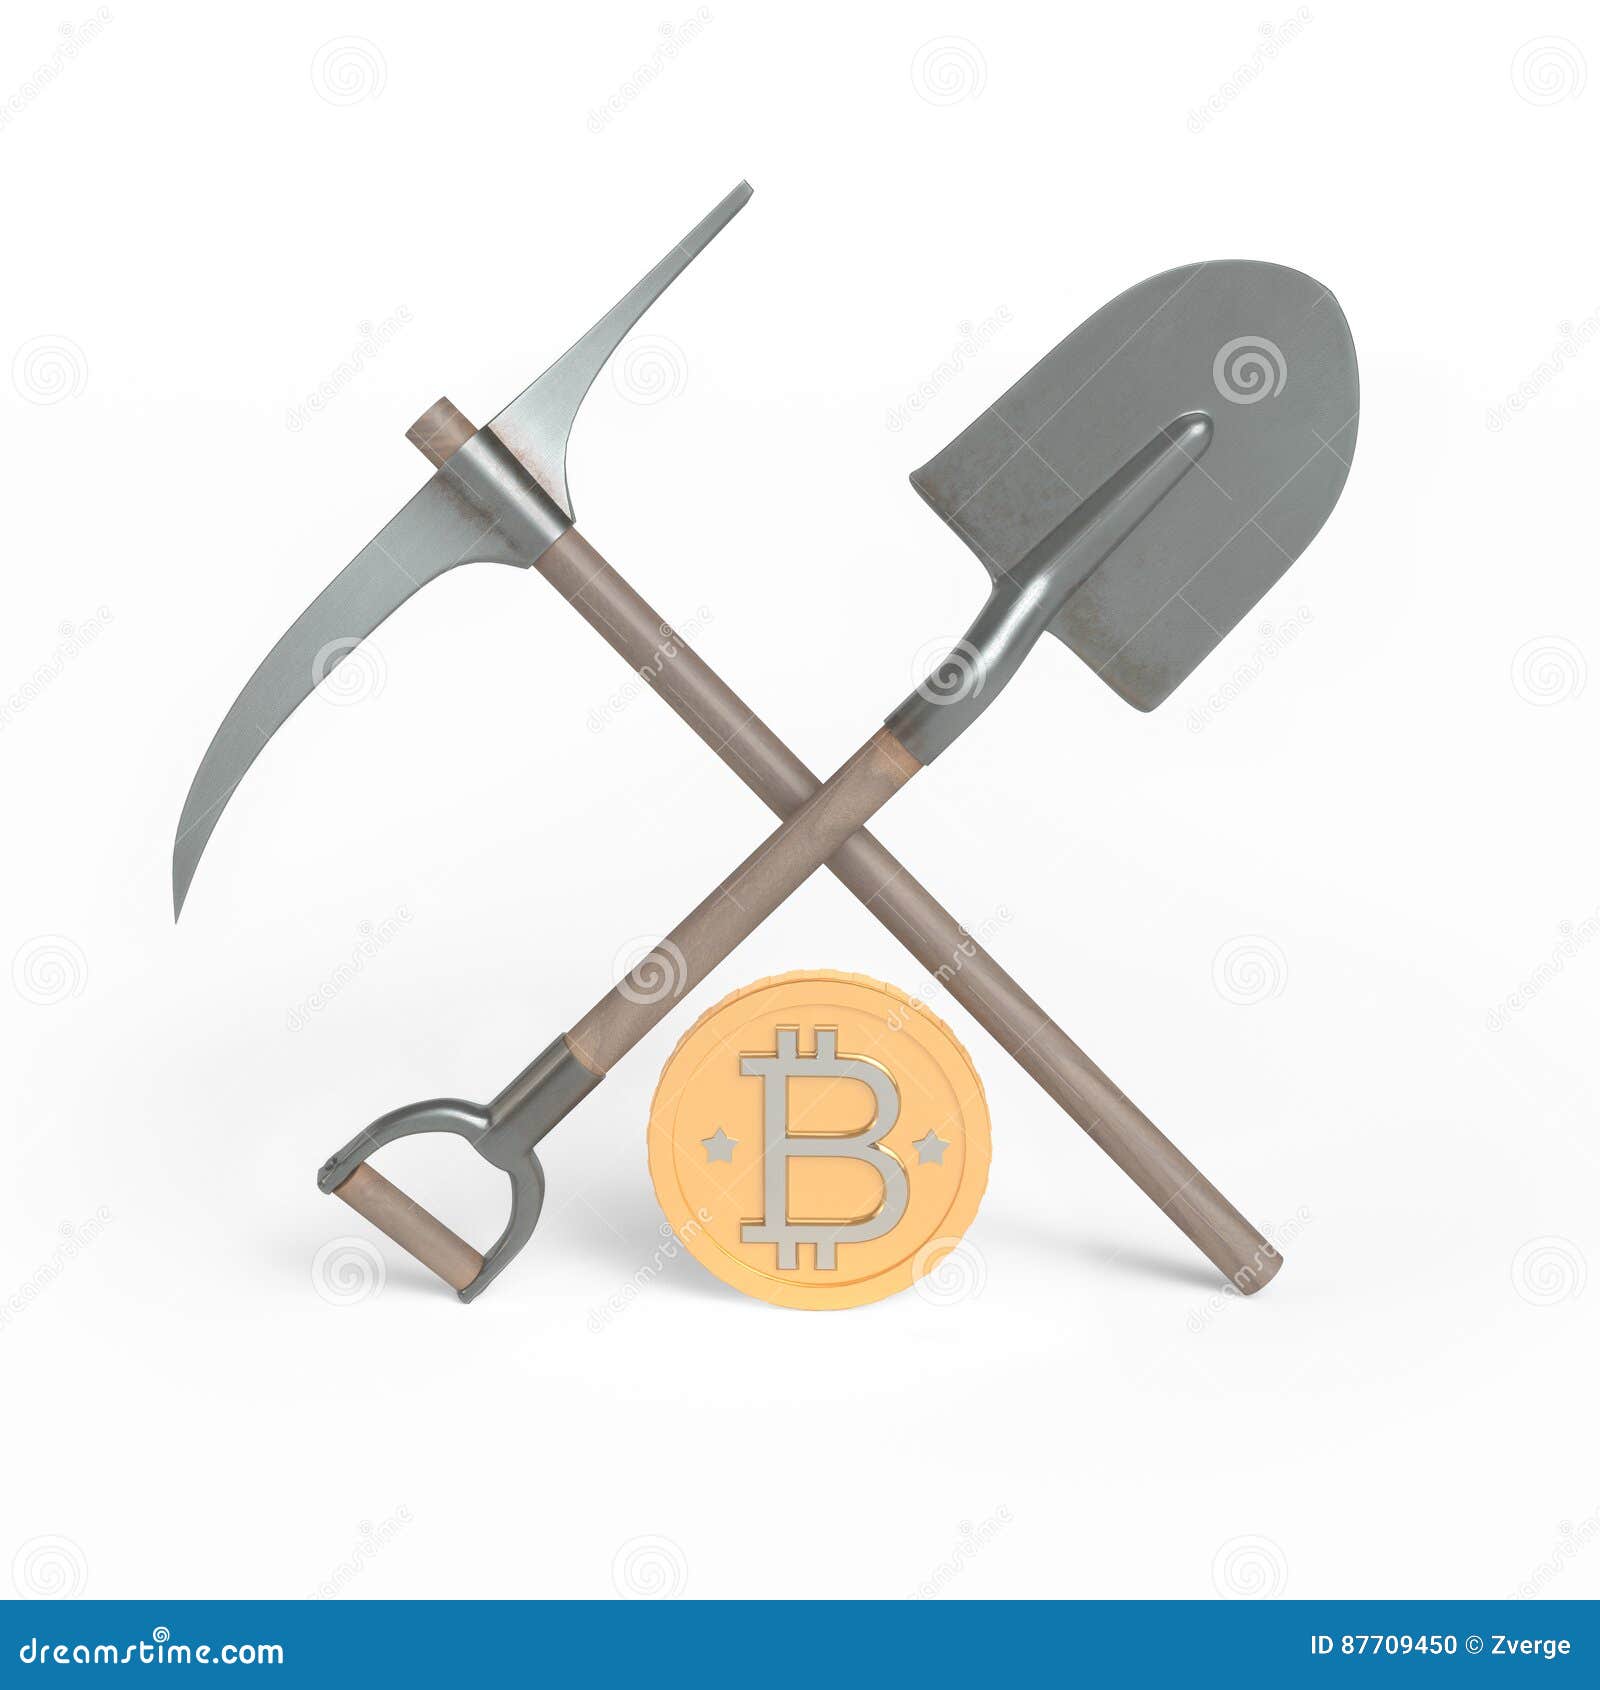 crypto picks and shovels